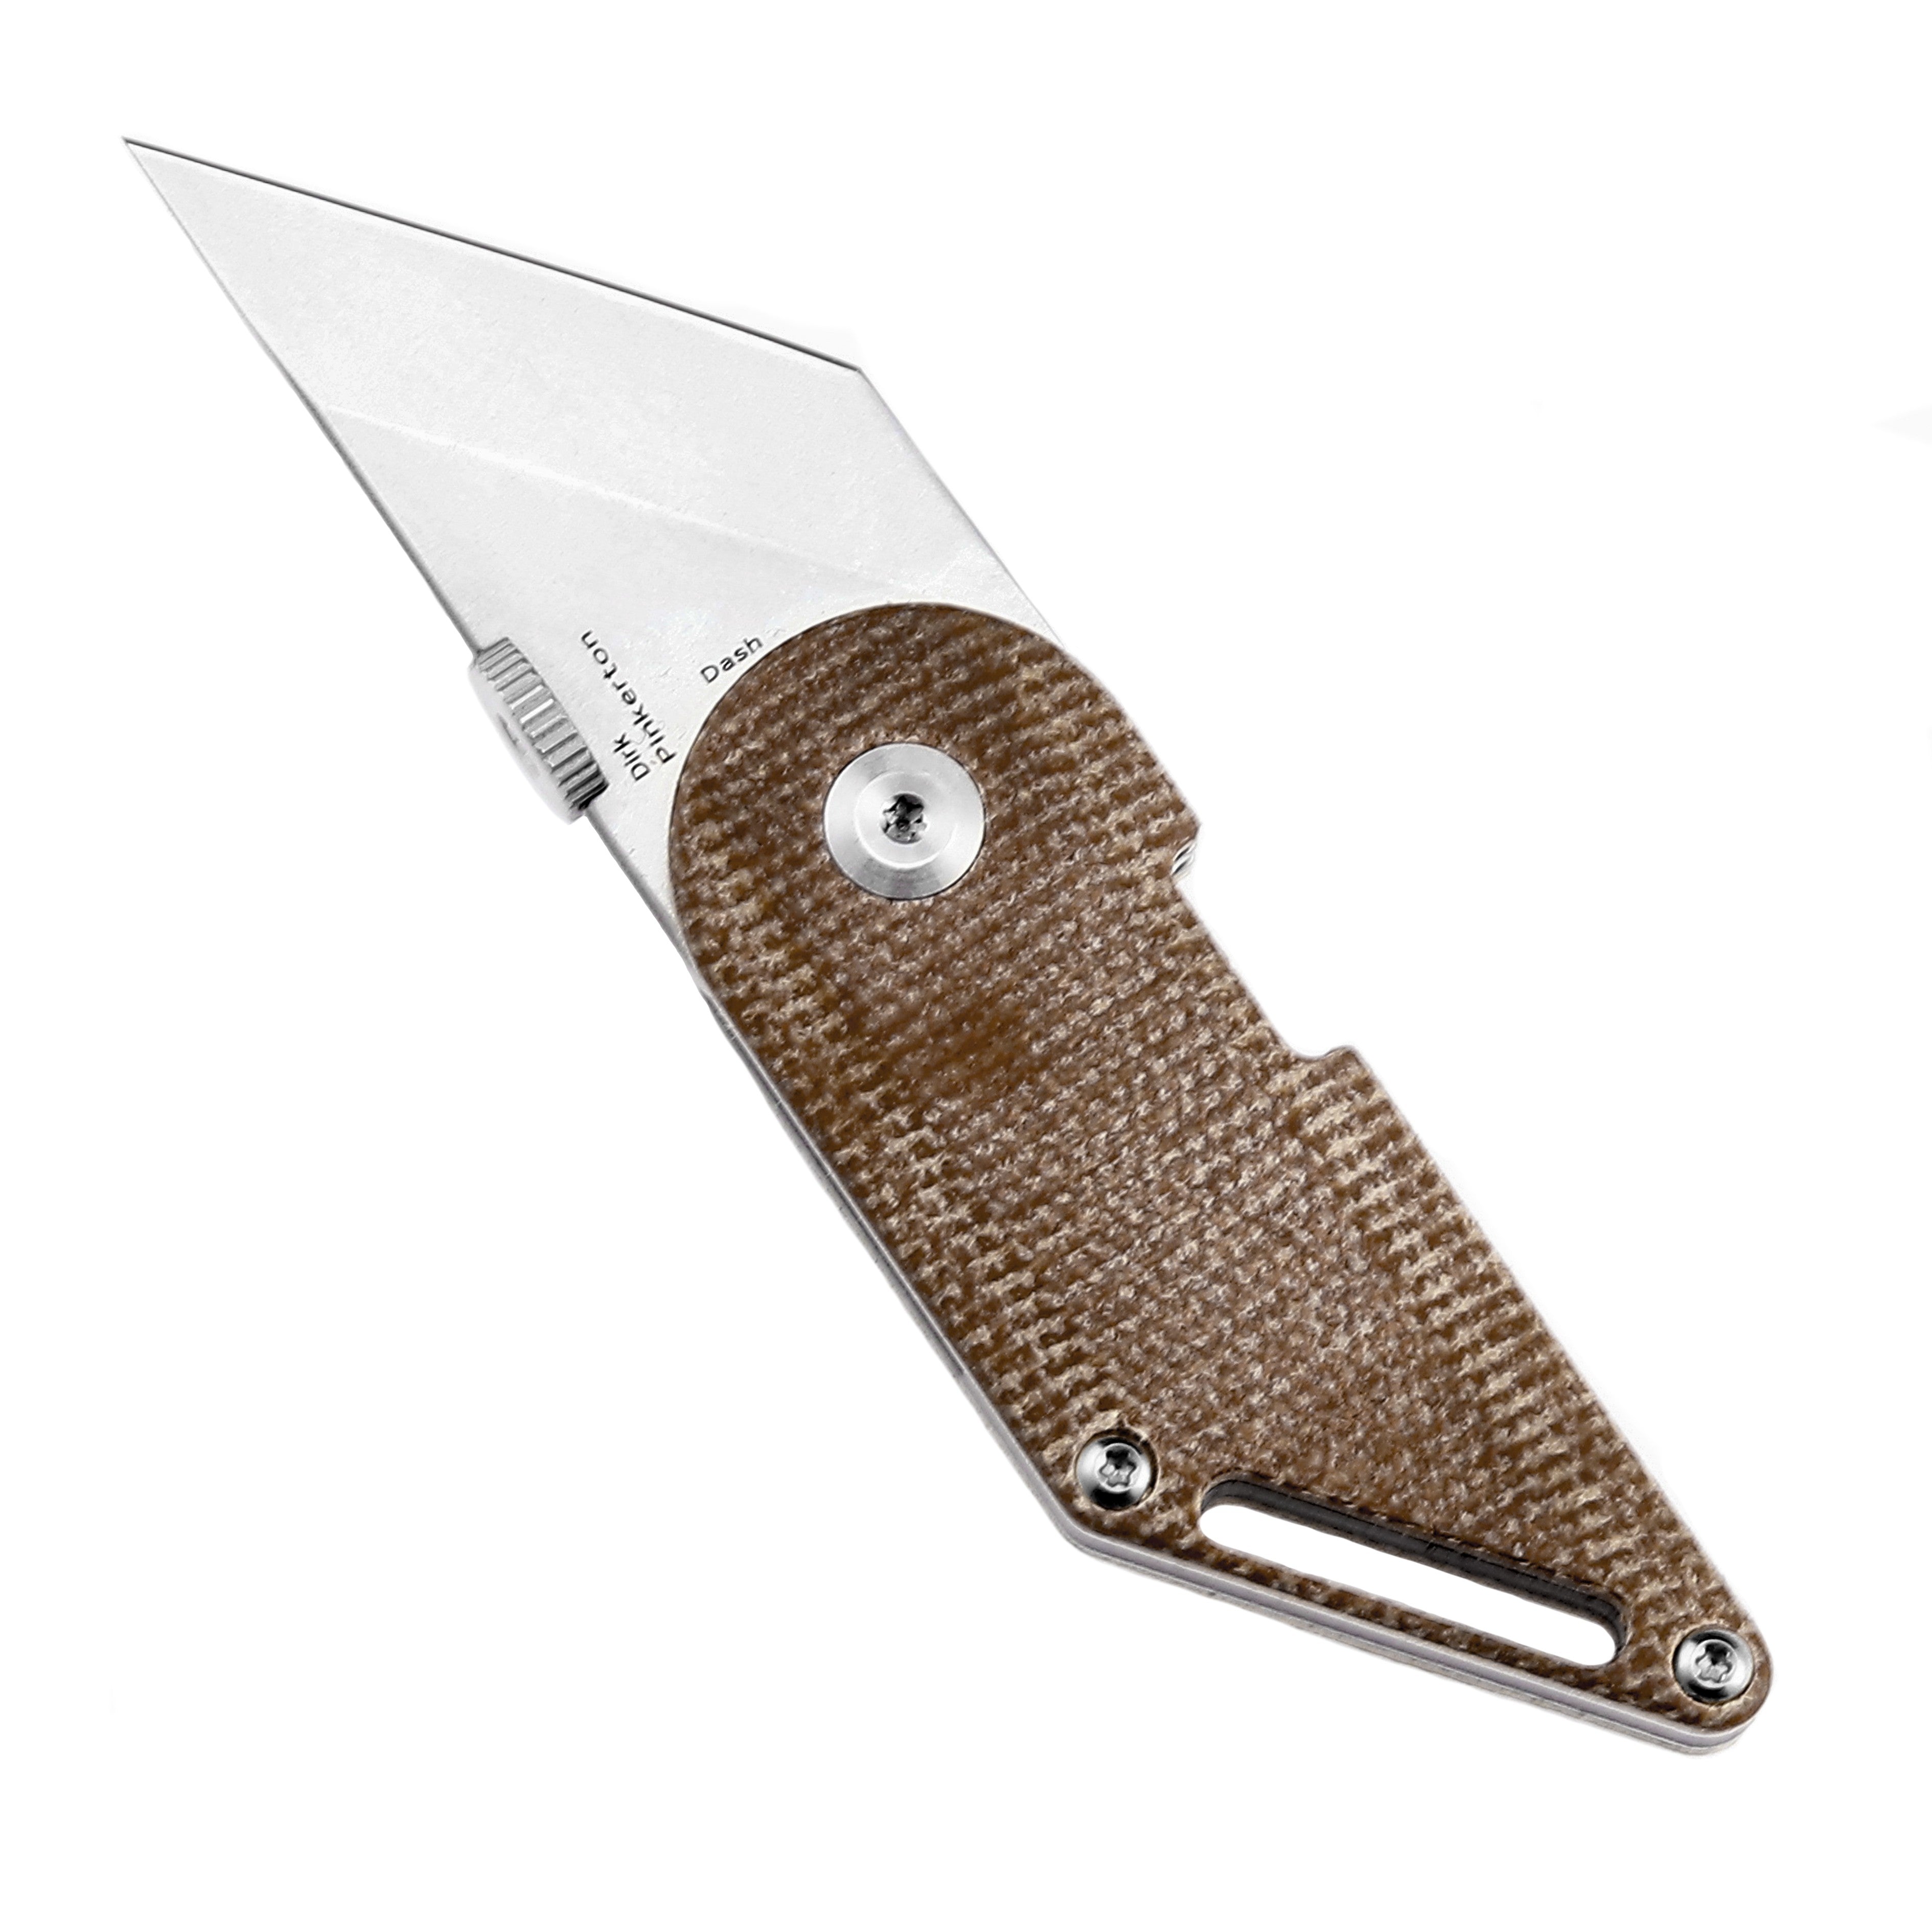 Kansept 刀具 Dash T3045A6 154CM 刀片米卡塔内衬锁 Edc 刀具